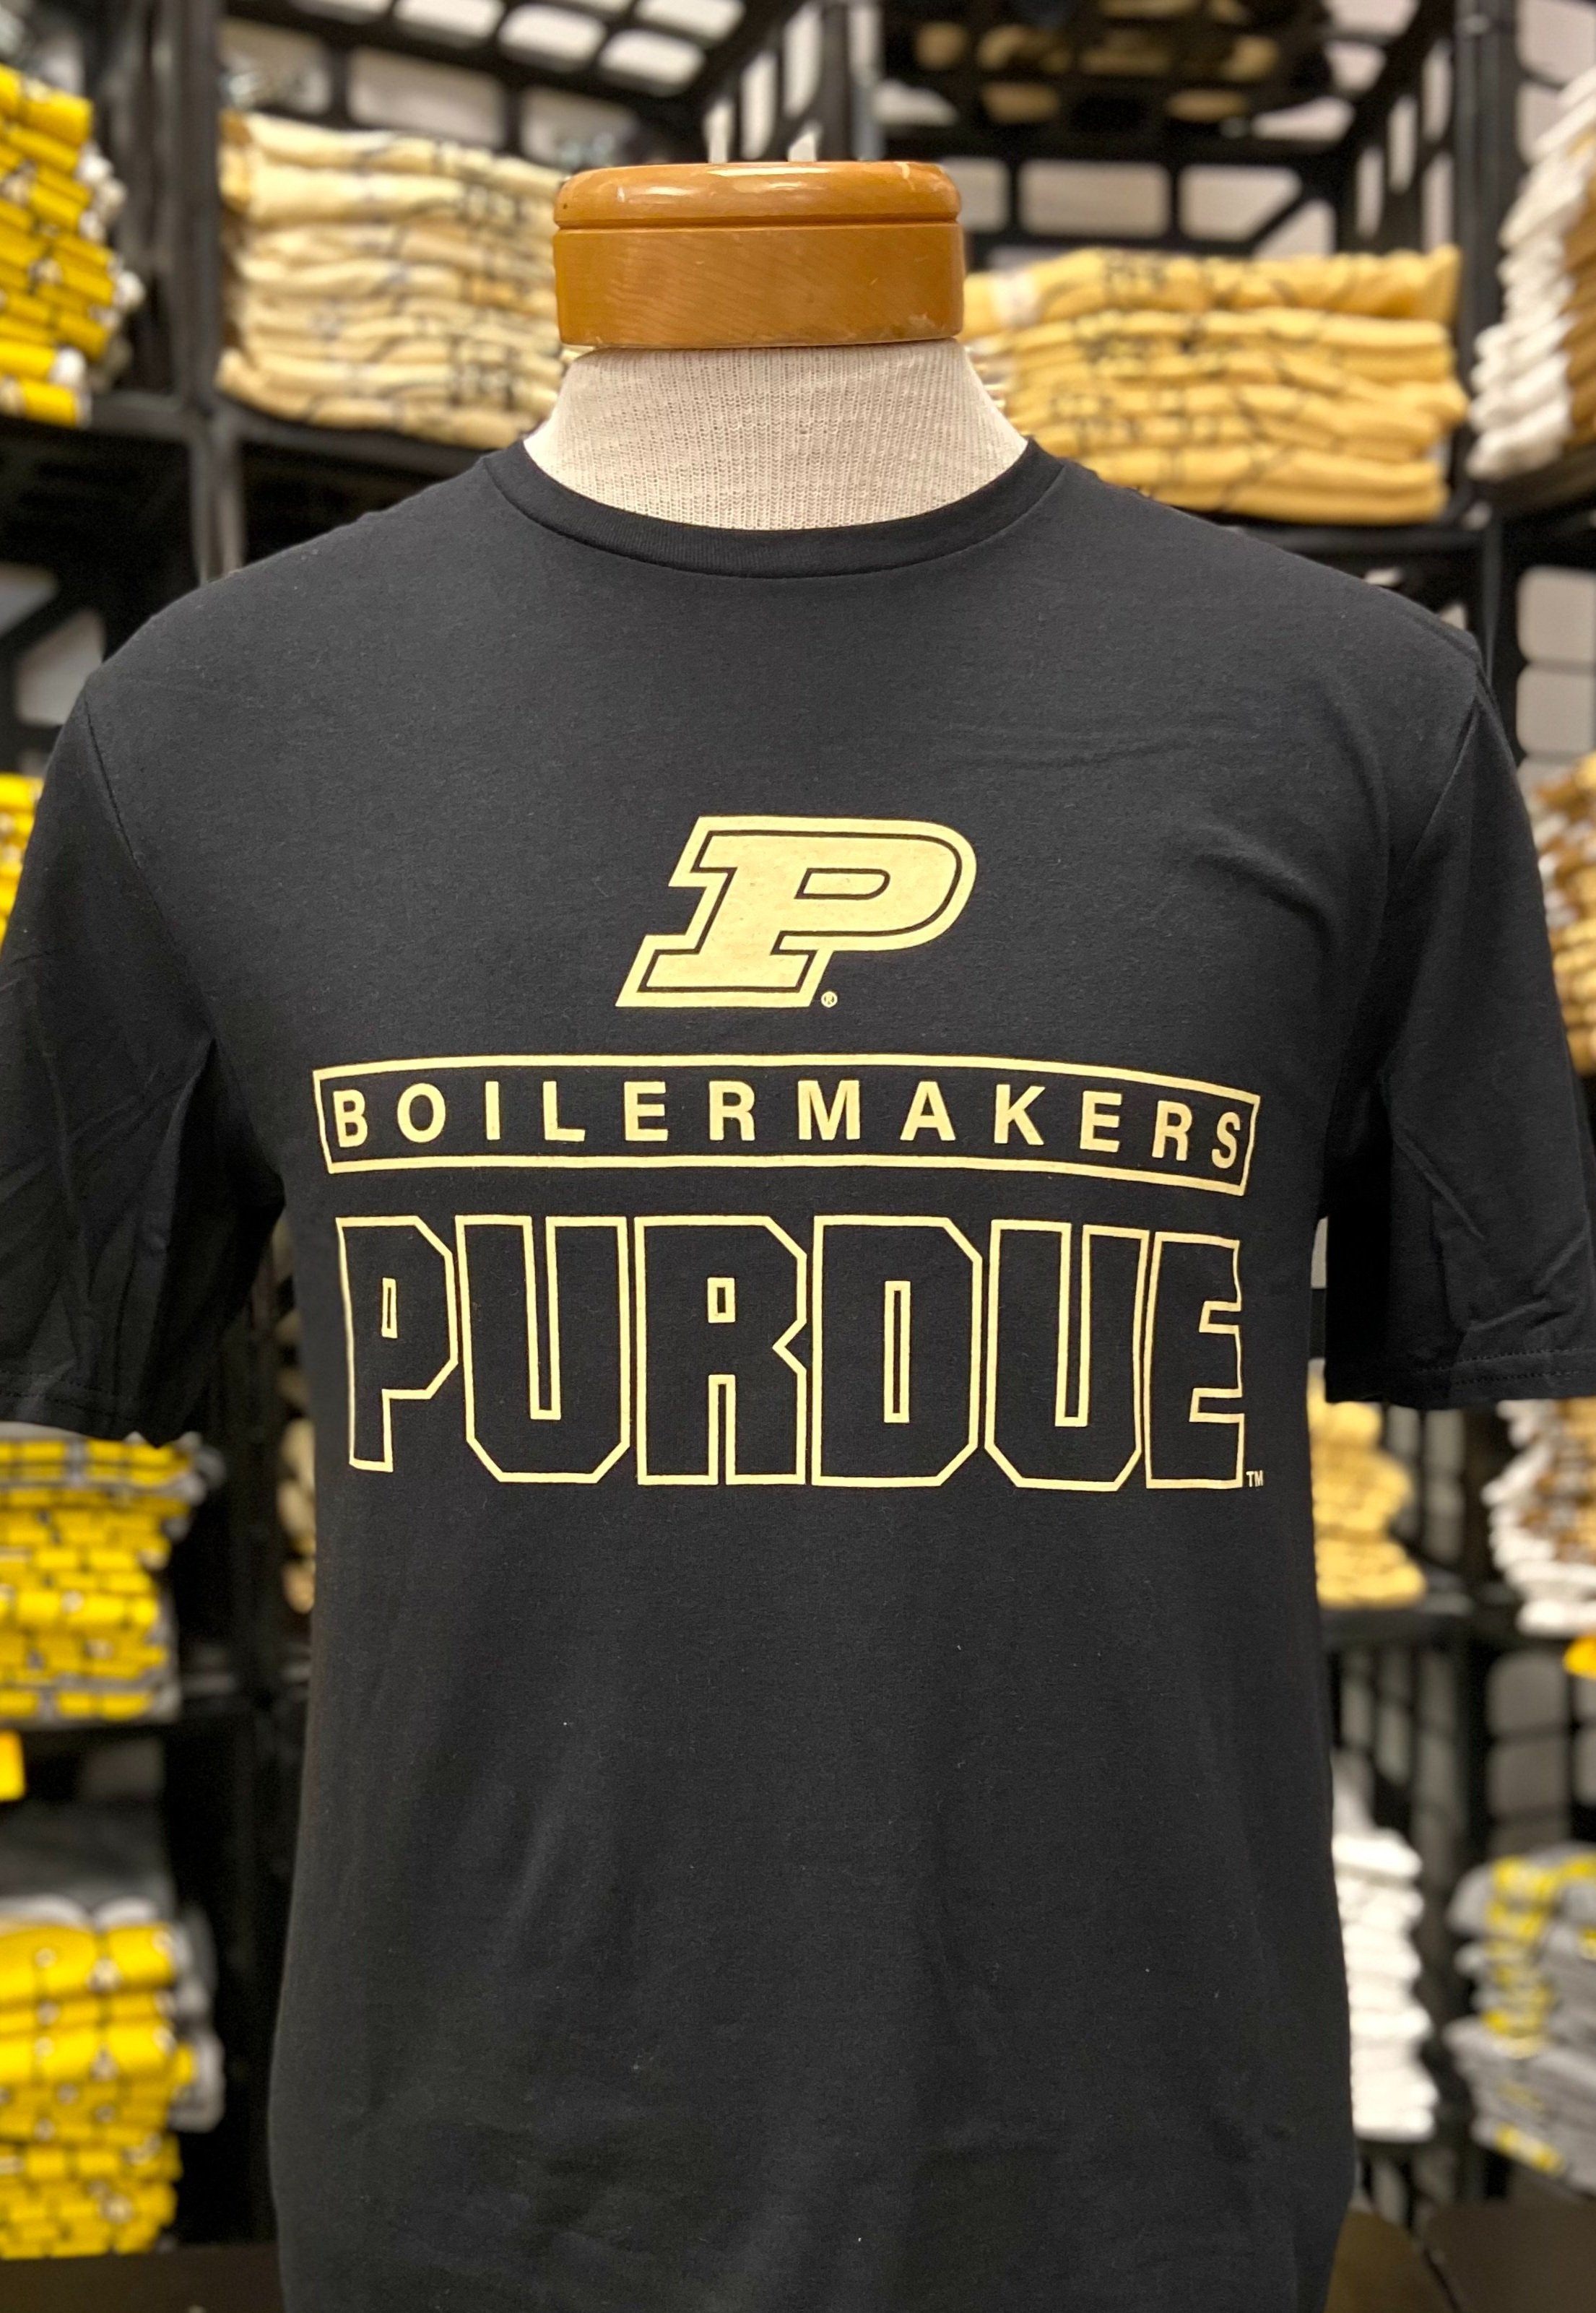 Purdue University Boilermakers Tank Top T-shirt size XL